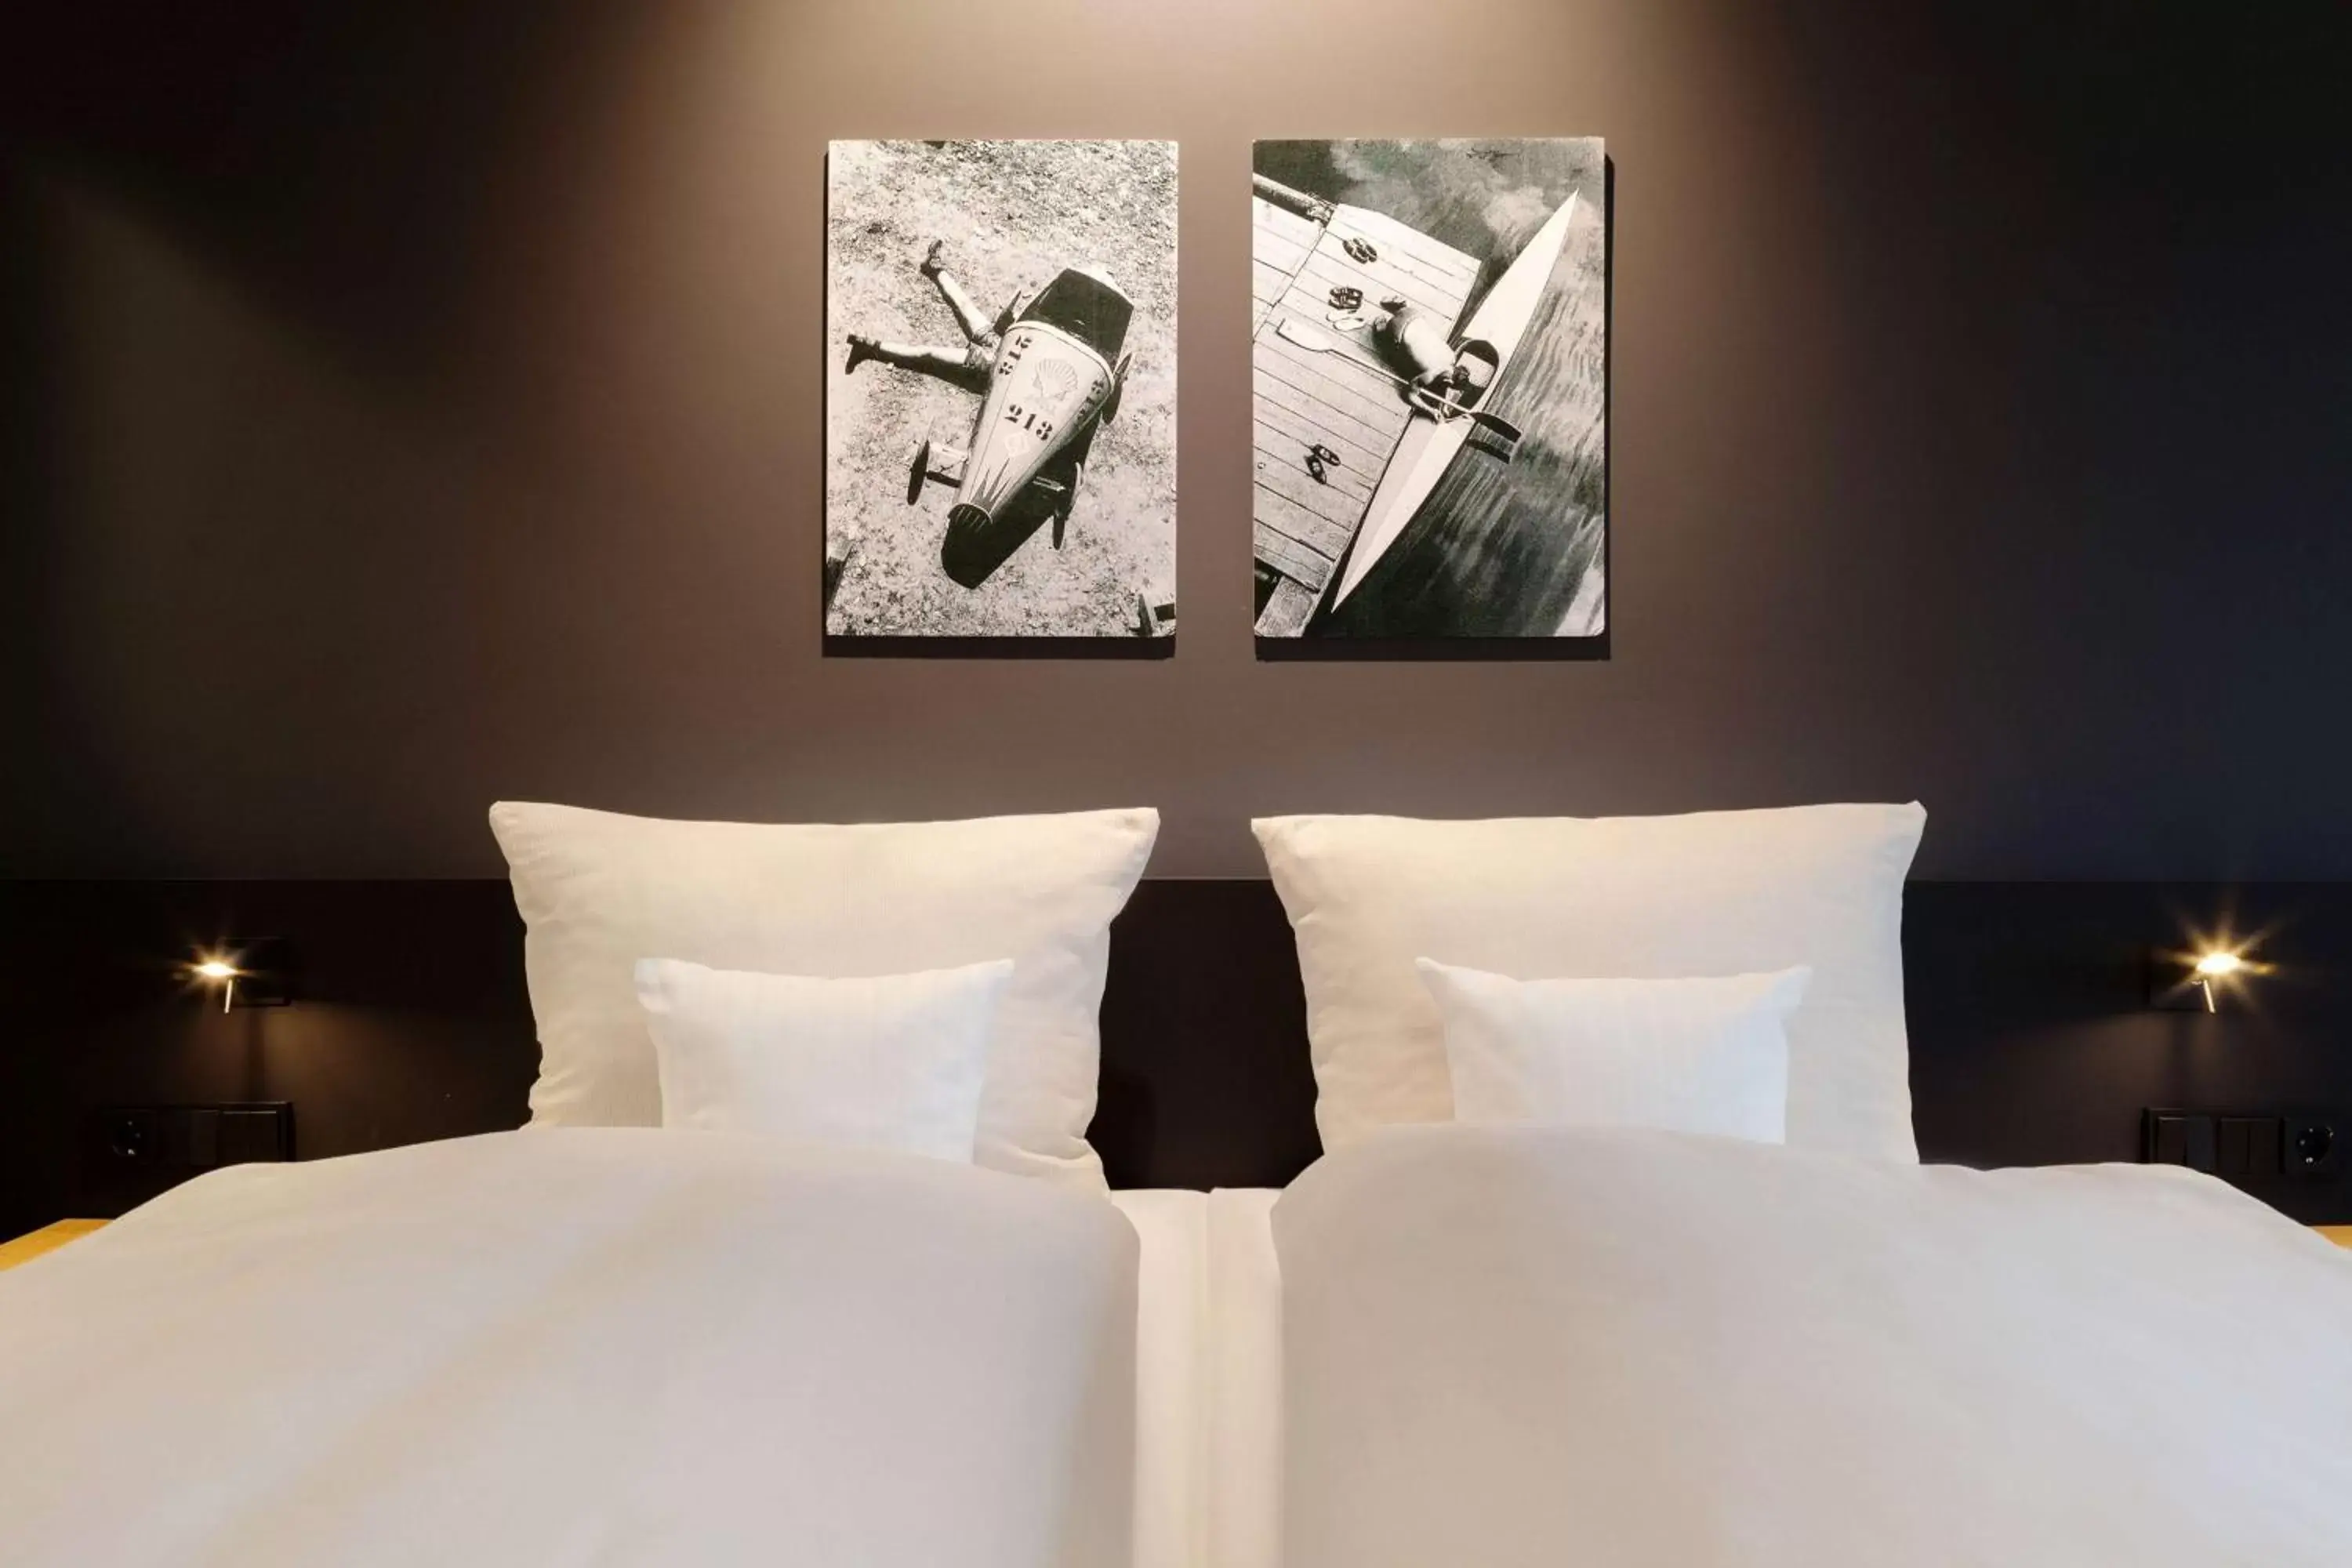 Photo of the whole room, Bed in Vienna House by Wyndham Ernst Leitz Wetzlar